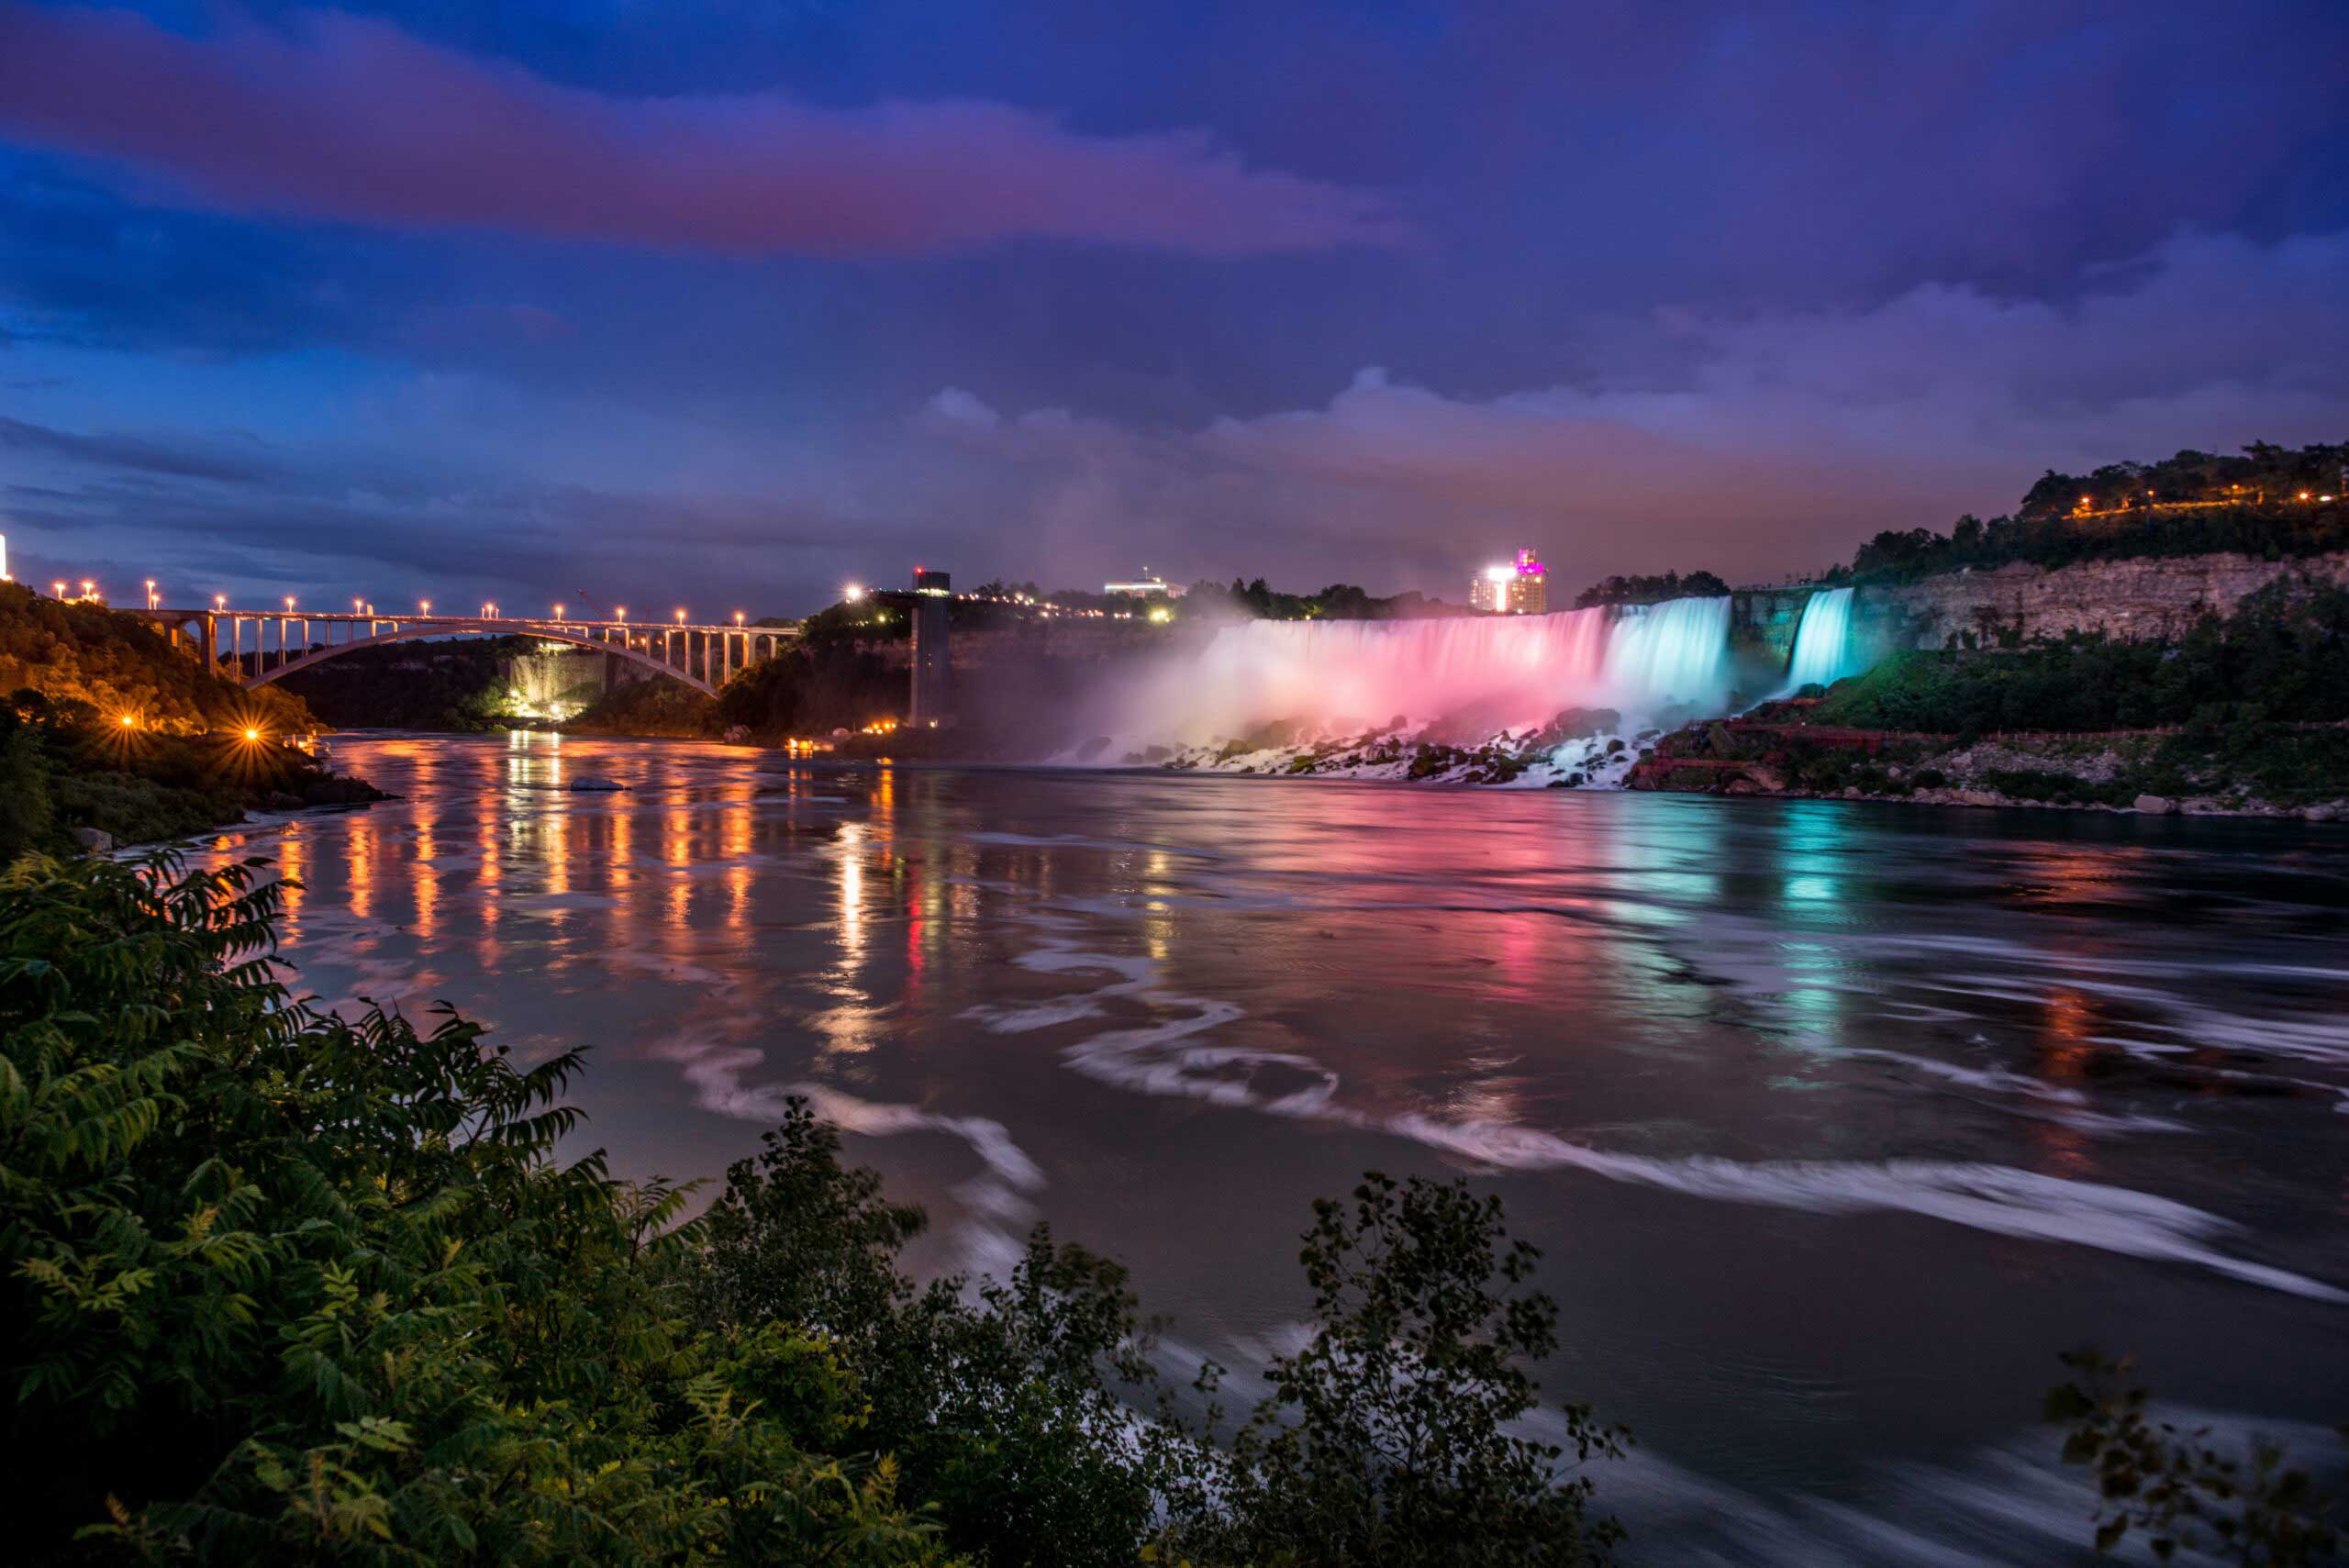 Niagara Falls at night with colored lights shining on the falls.